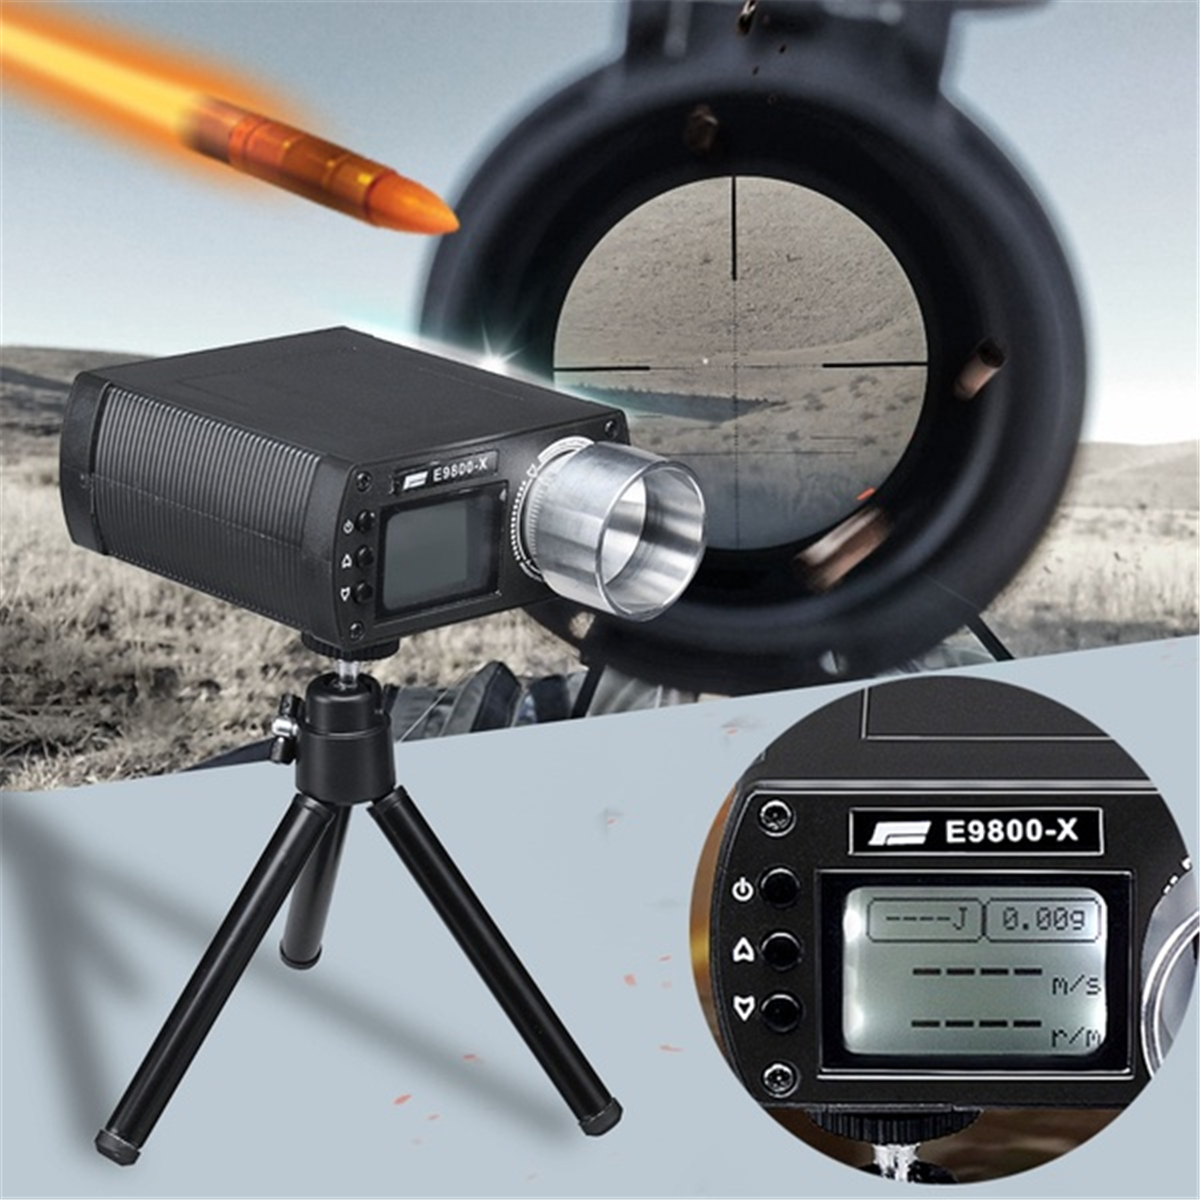 E9800-X Shooting Speed Tester High-Precision Shooting Chronograph LCD Screen 34